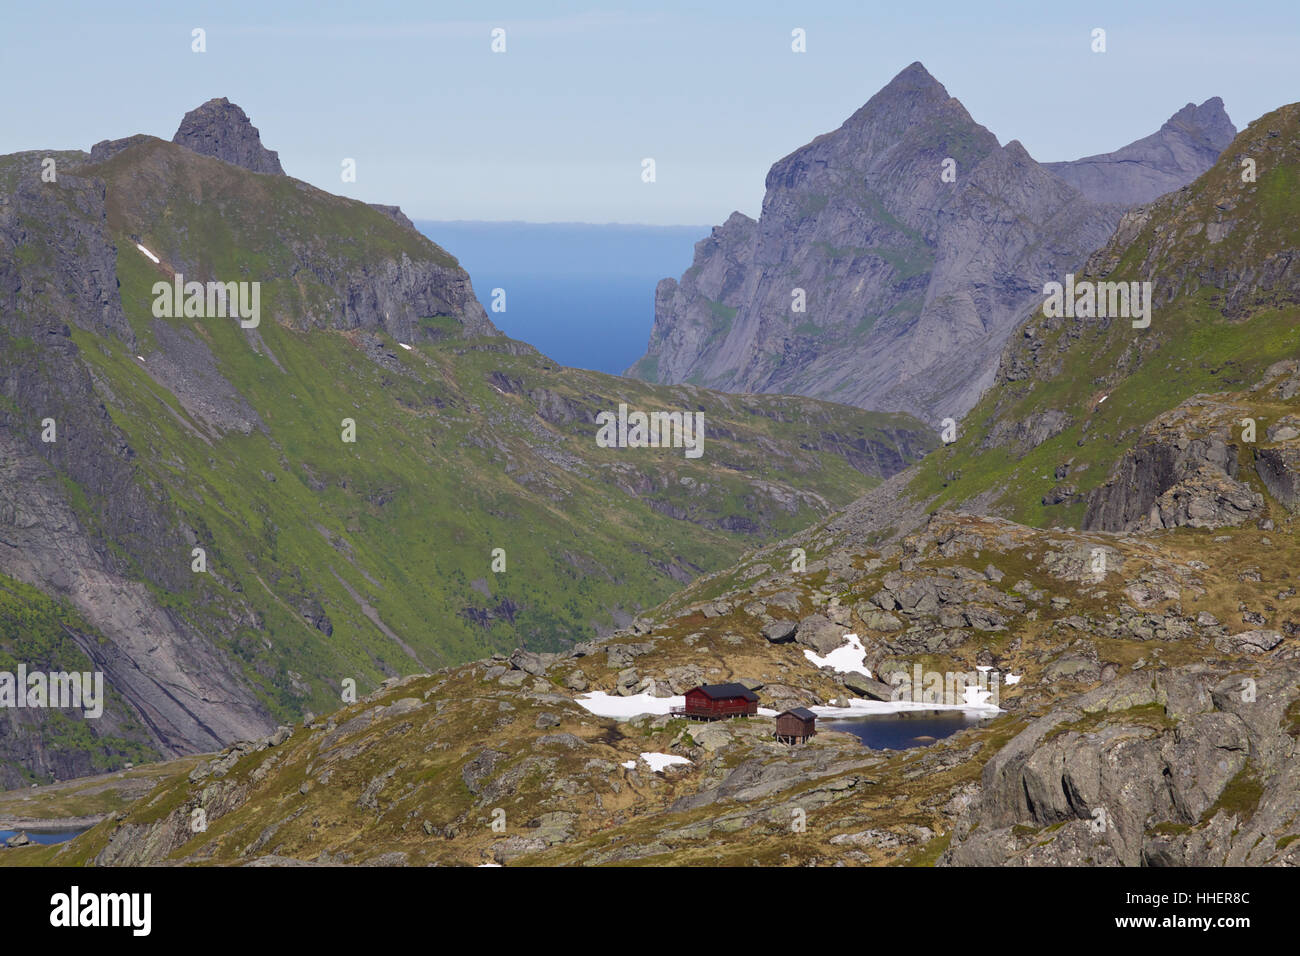 Berge, Europa, Norwegen, Orte, Anblick, Ausblick, Outlook, Perspektive, Vista, Stockfoto